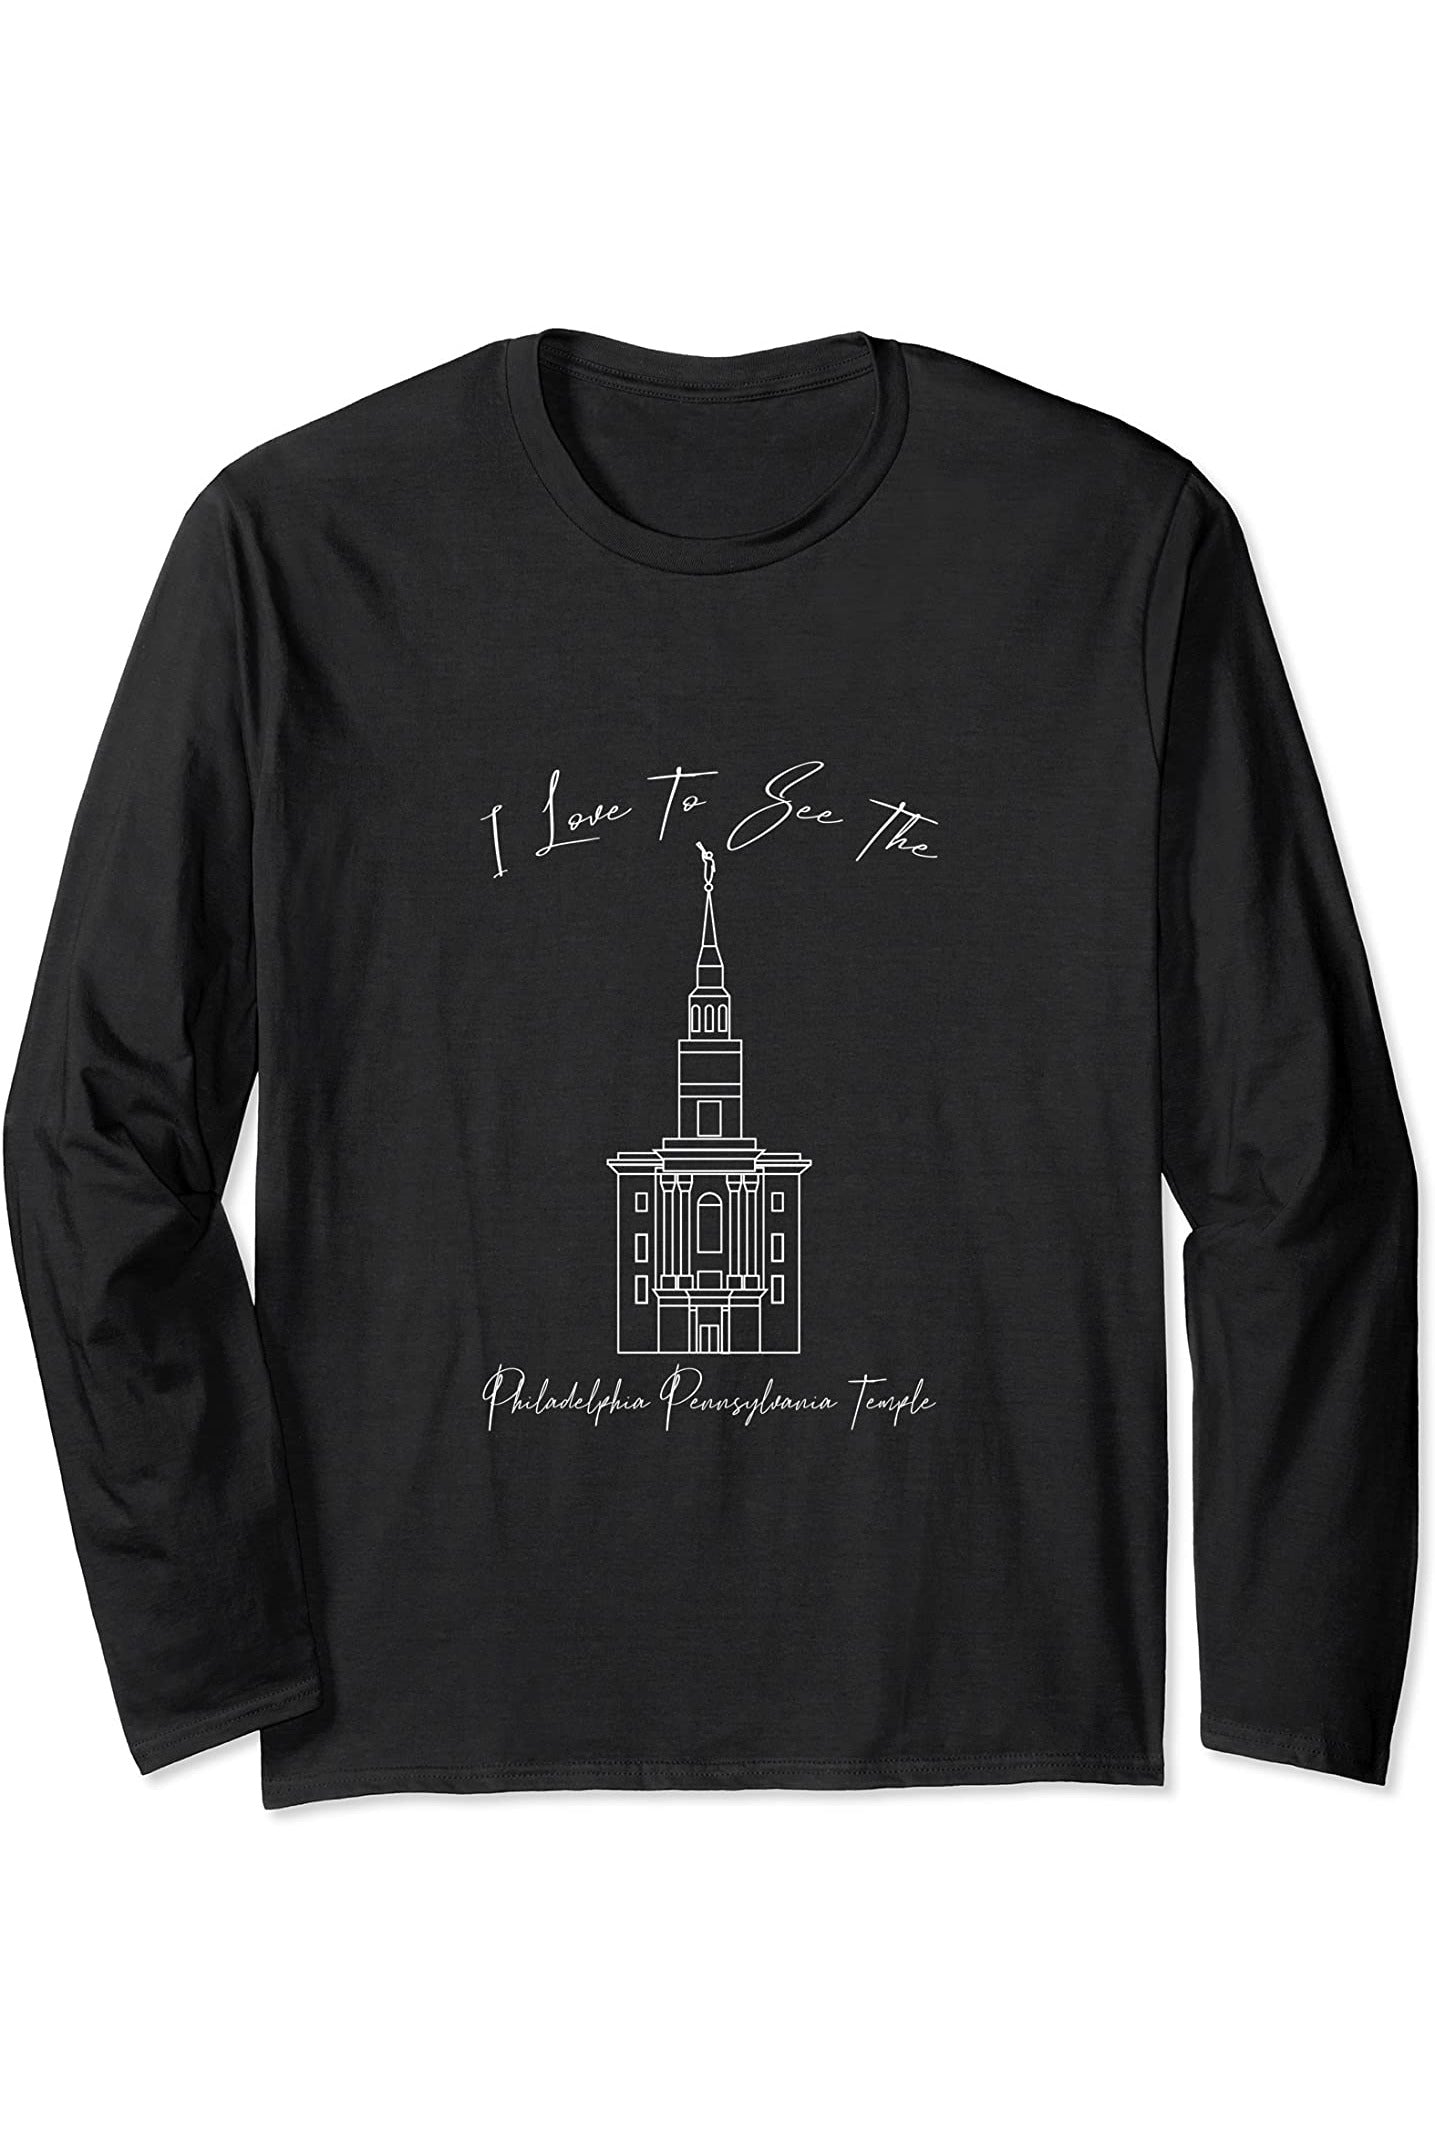 Philadelphia Pennsylvania Temple Long Sleeve T-Shirt - Calligraphy Style (English) US